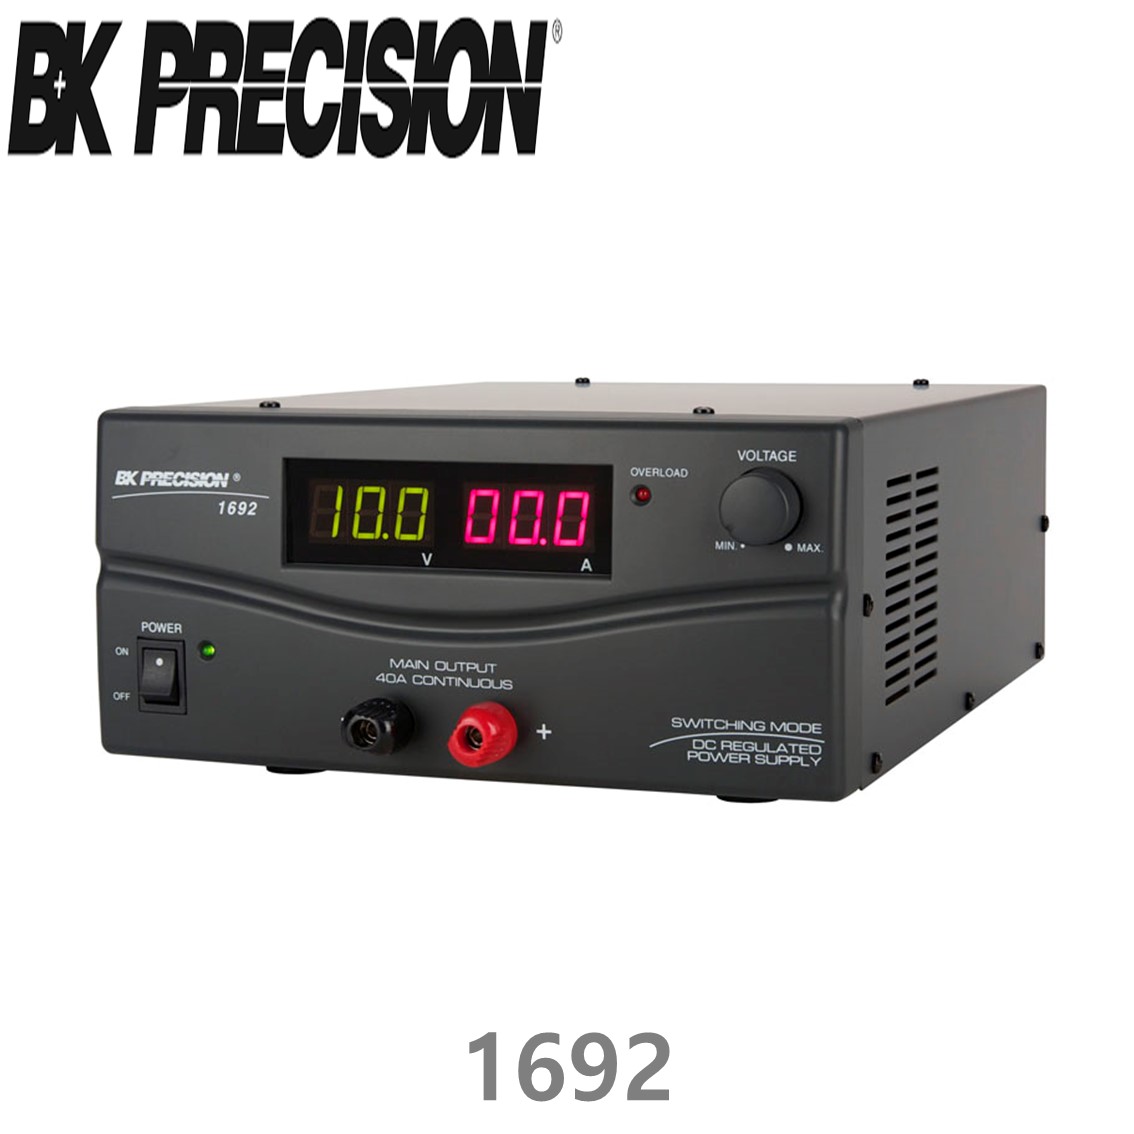 [ BK PRECISION ] BK 1692, 15V/40A, Switching DC Power Supply, DC 전원공급기, B&K 1692, B&K PRECISION 1692-220V